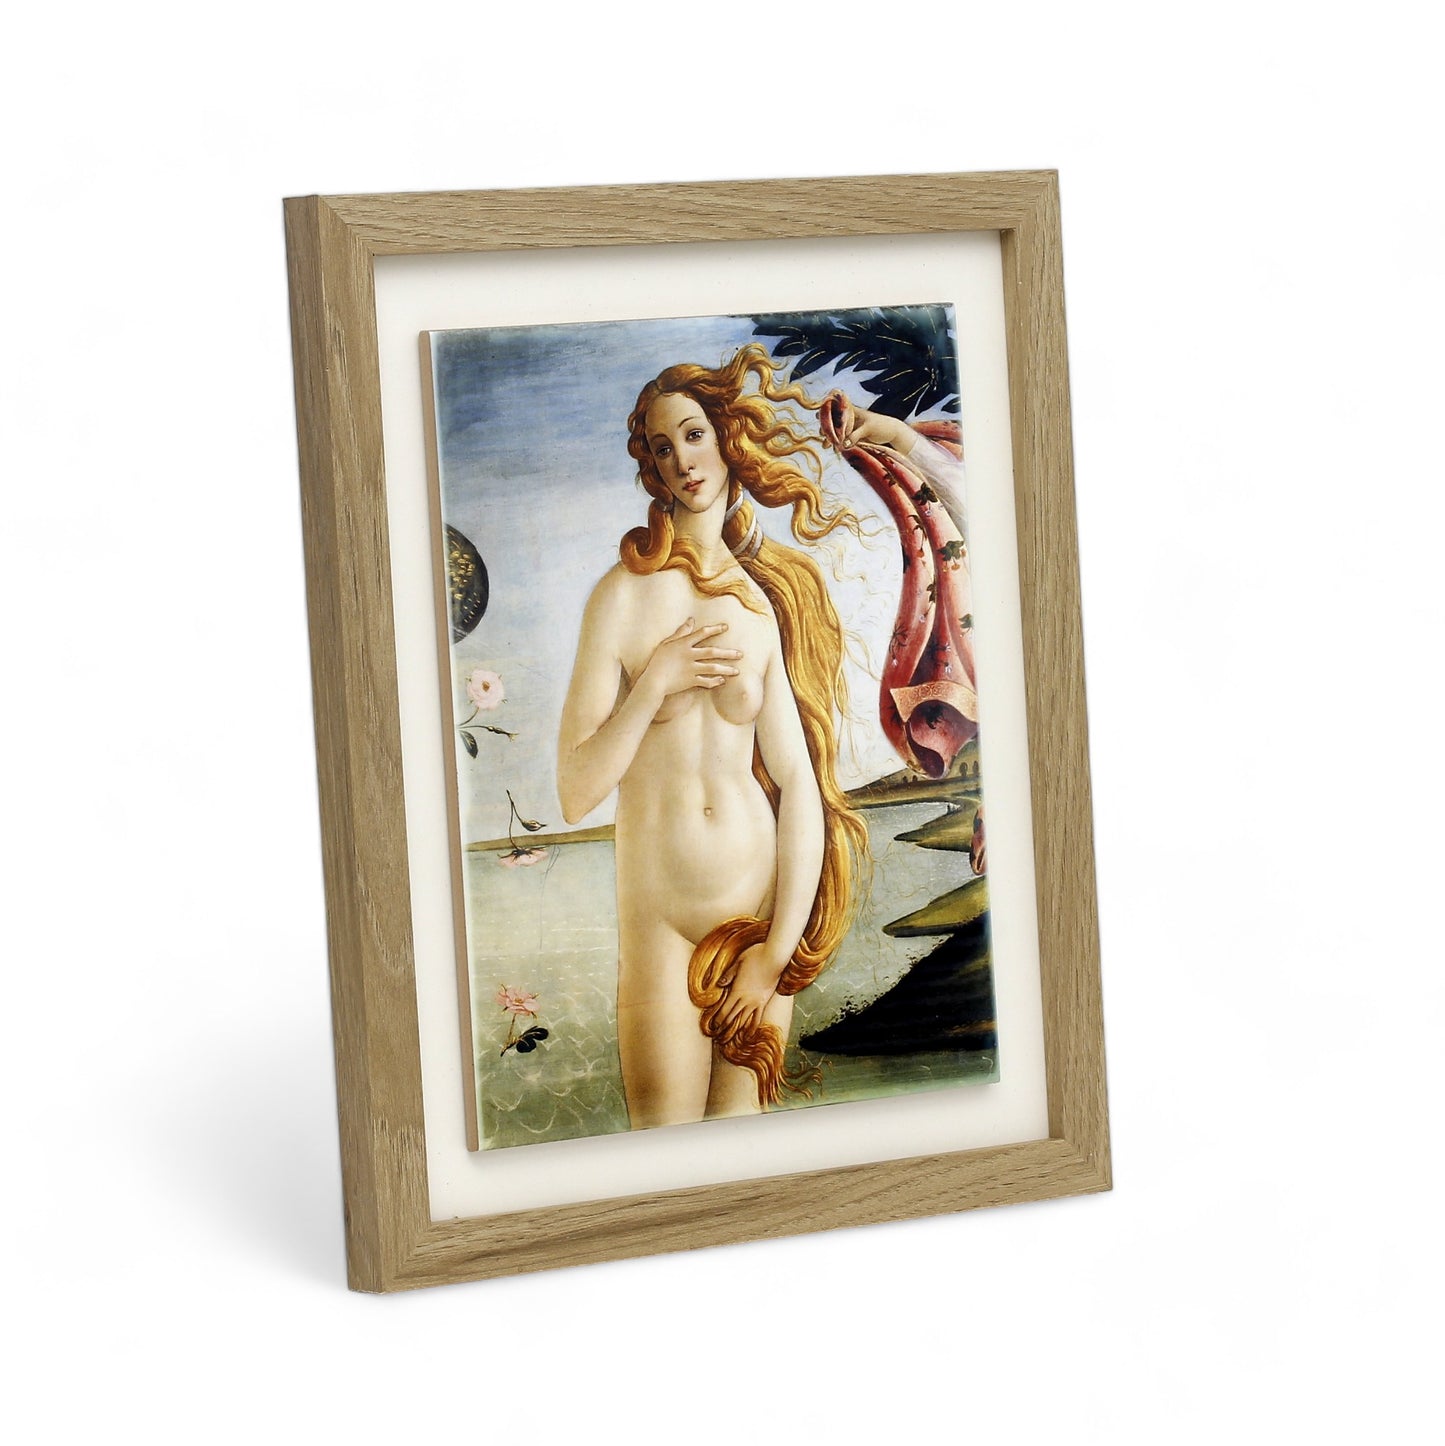 AFFRESCO: Framed Tile - Opera The Birth of Venus (Detail) by Sandro Botticelli (8x10) - Natural Wood Frame